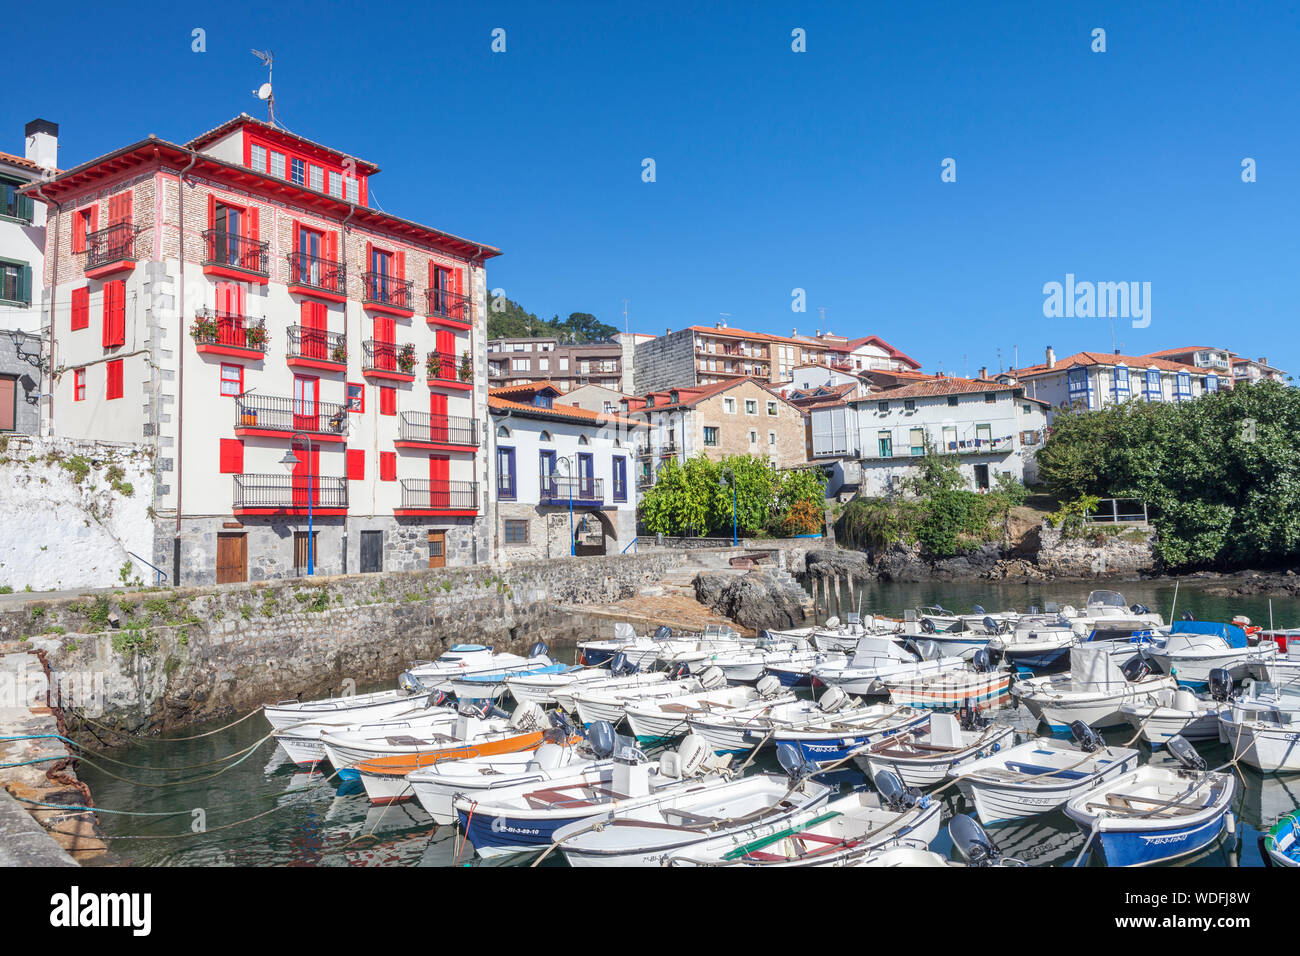 Mundaka village, Vizcaya province, The Basque Country, Spain Stock Photo